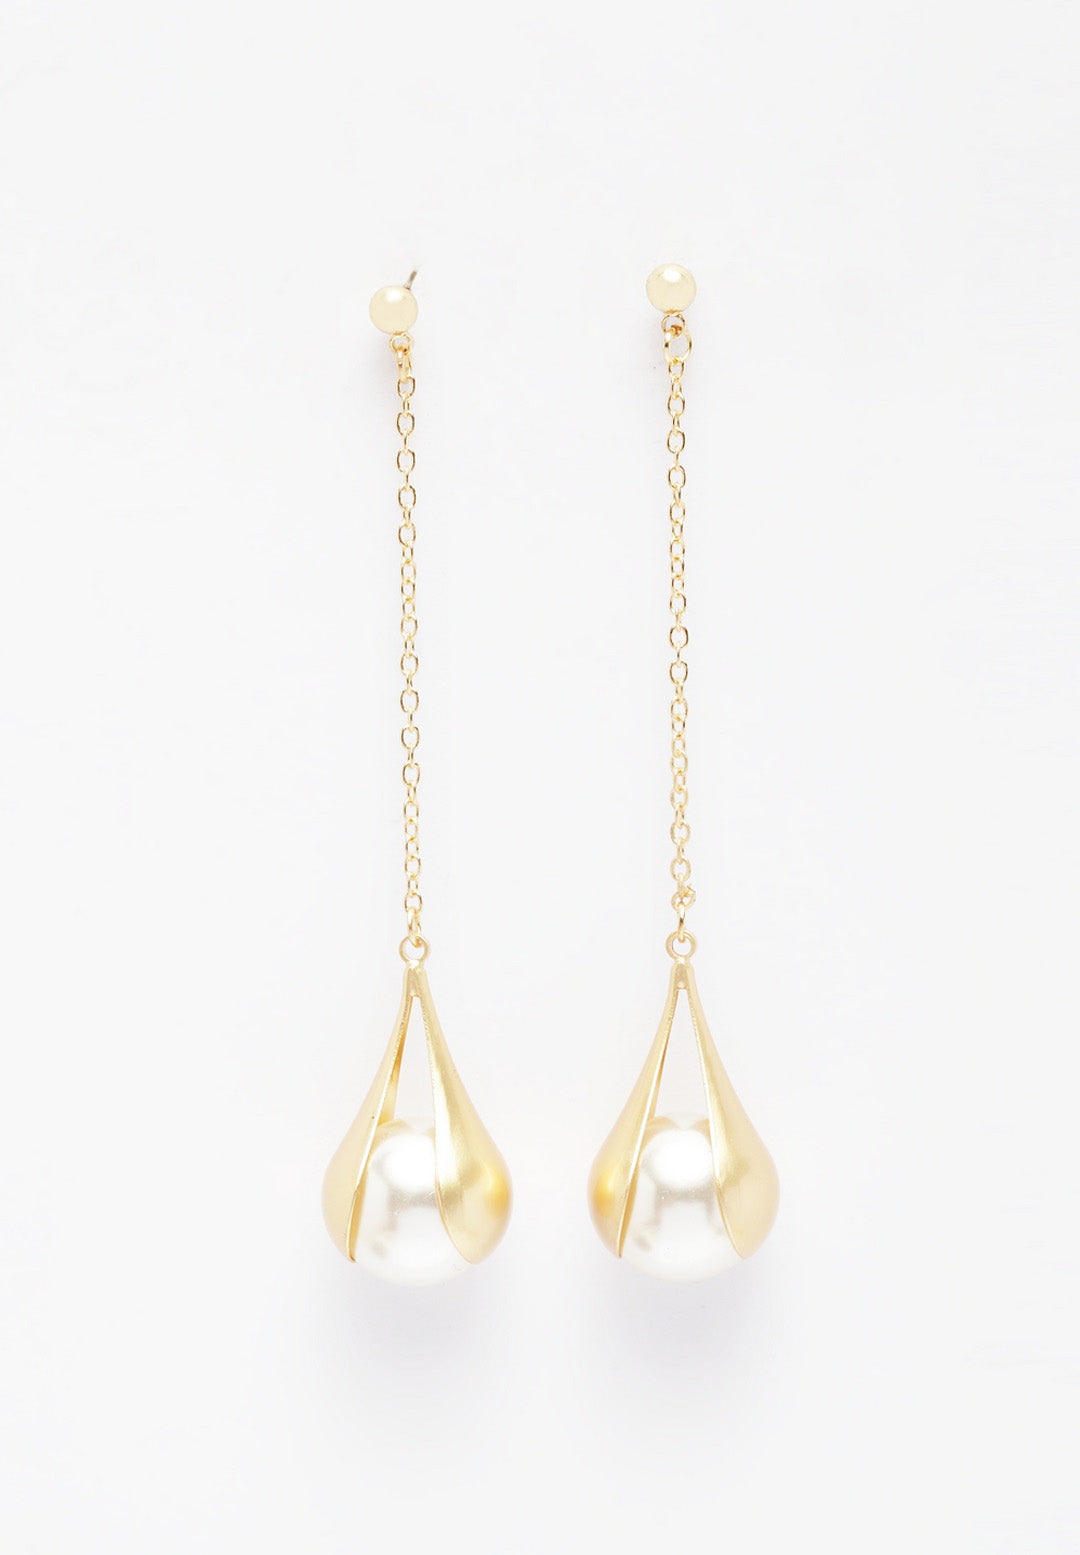 Avant-Garde Paris Gold-Plated Drop Earrings With Pearls